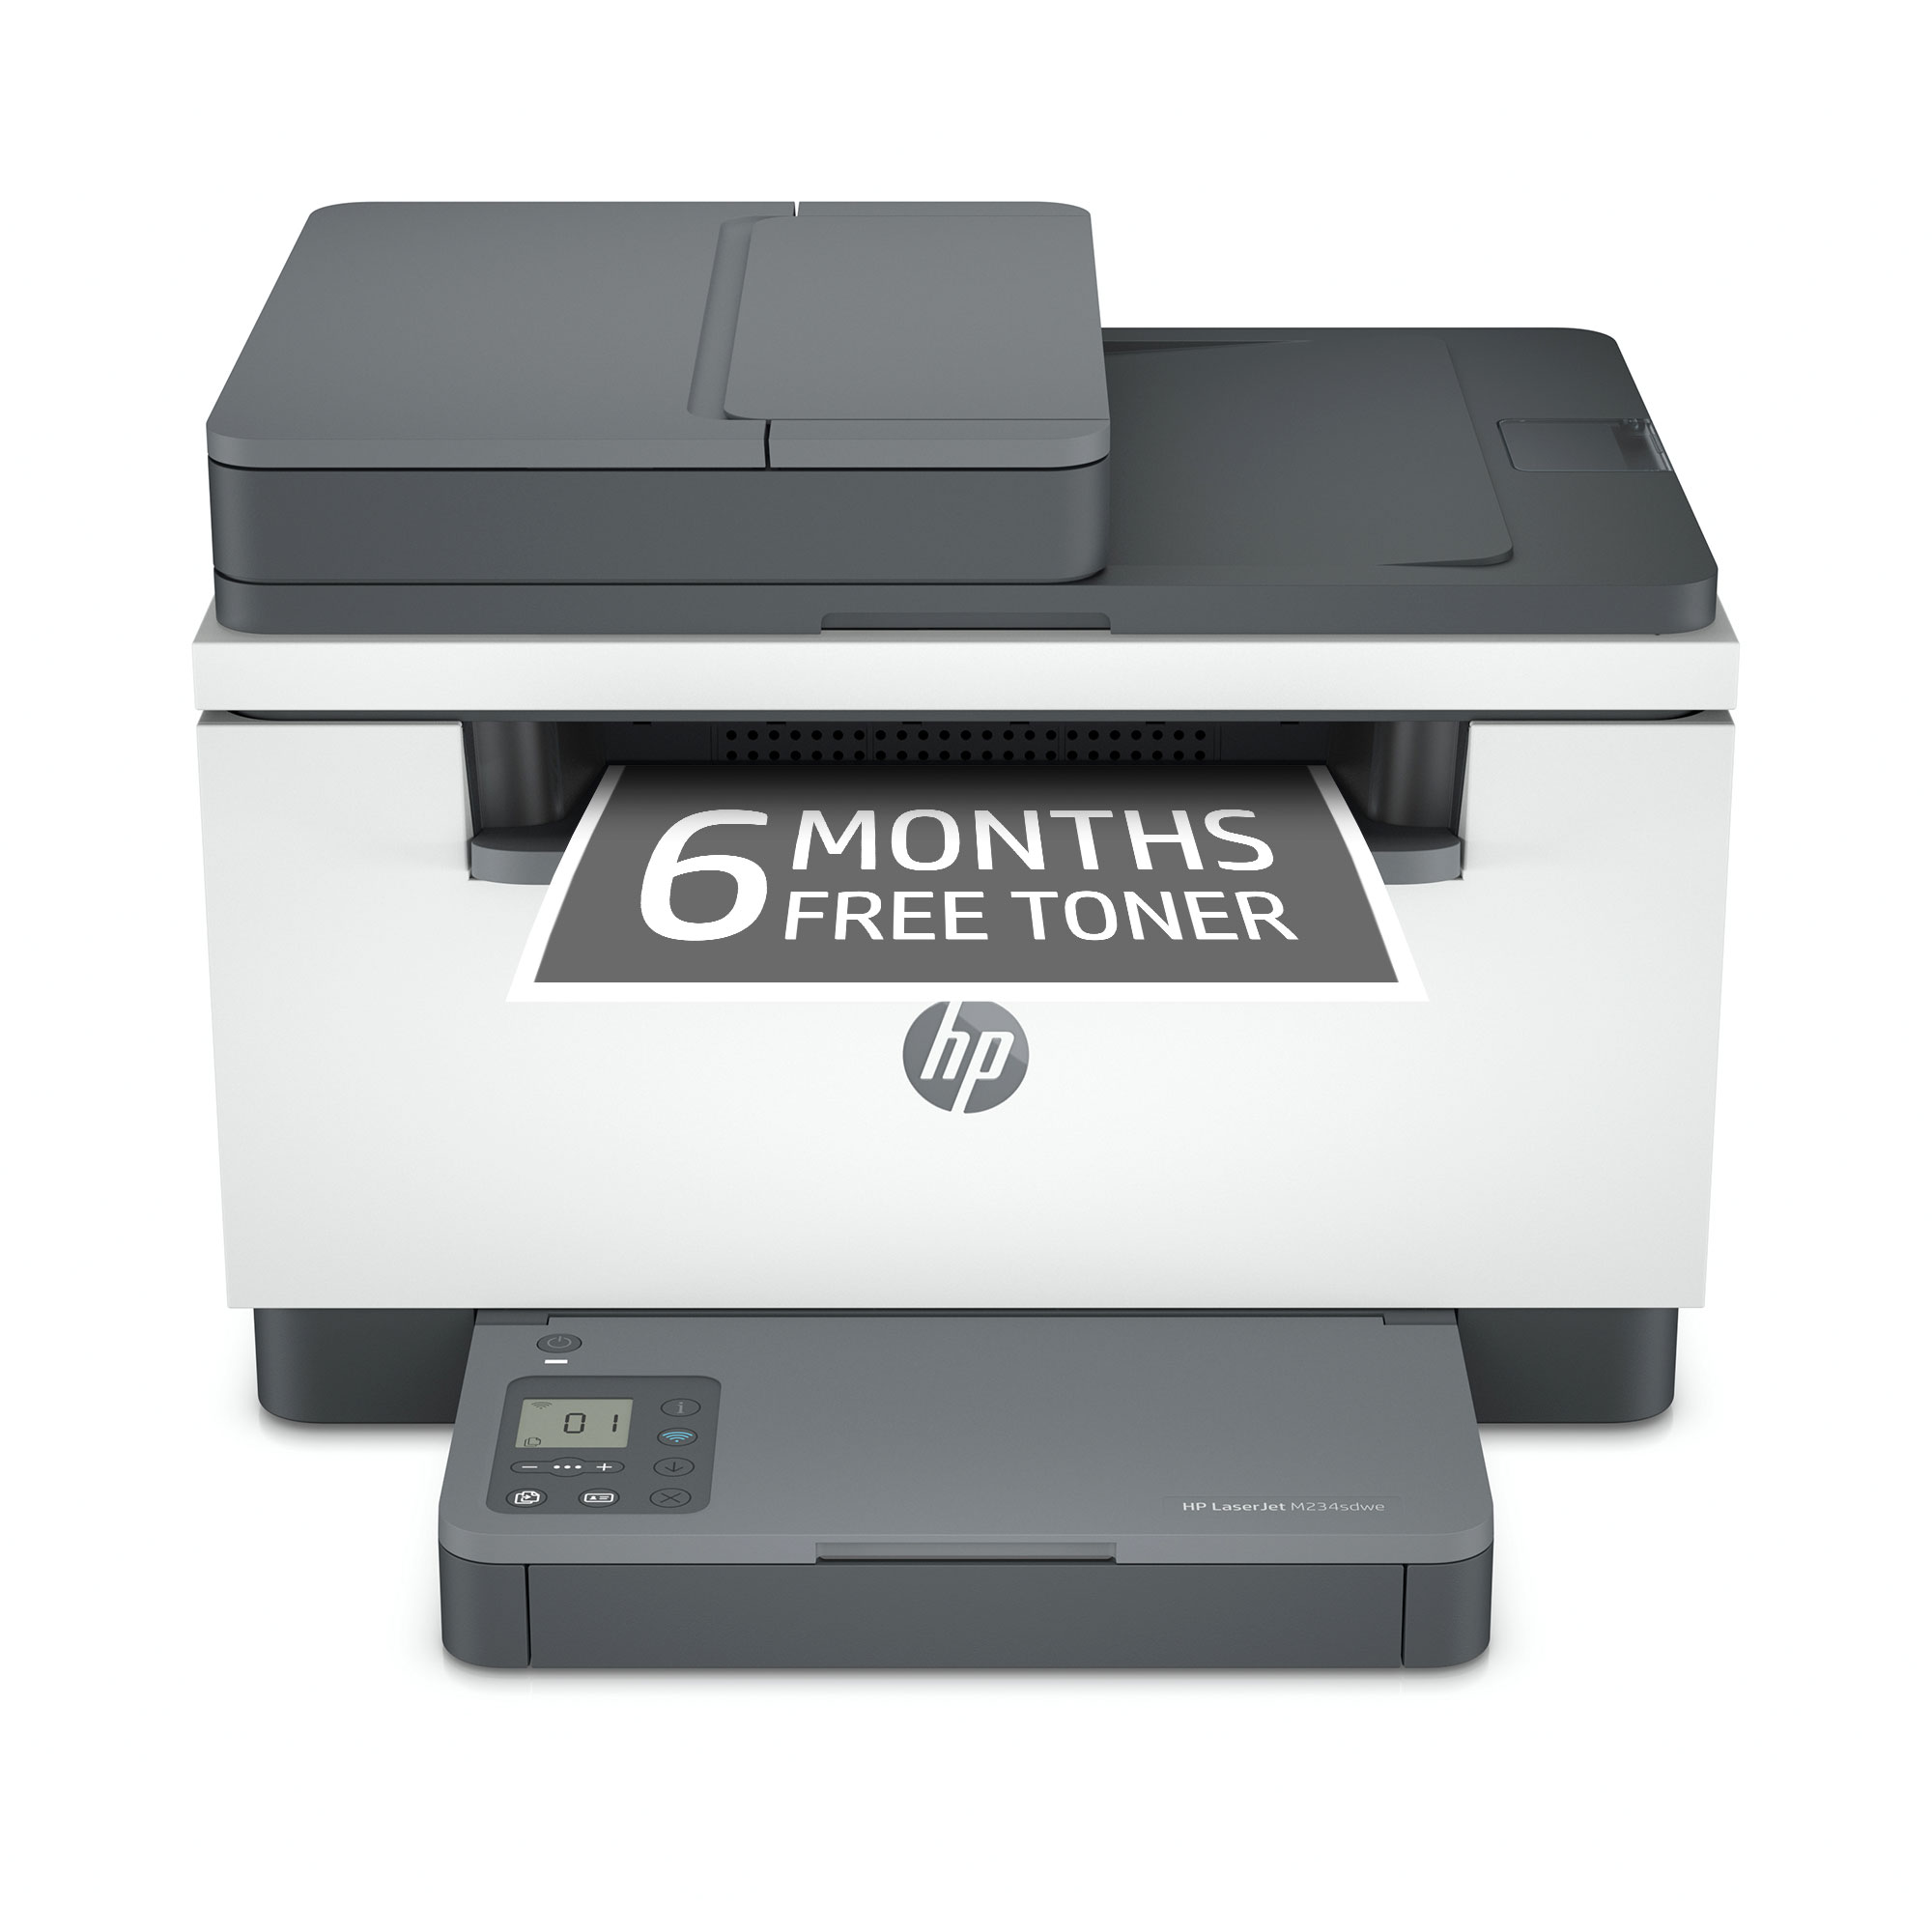 HP 1320N LaserJet Printer FULLY REFURBISHED